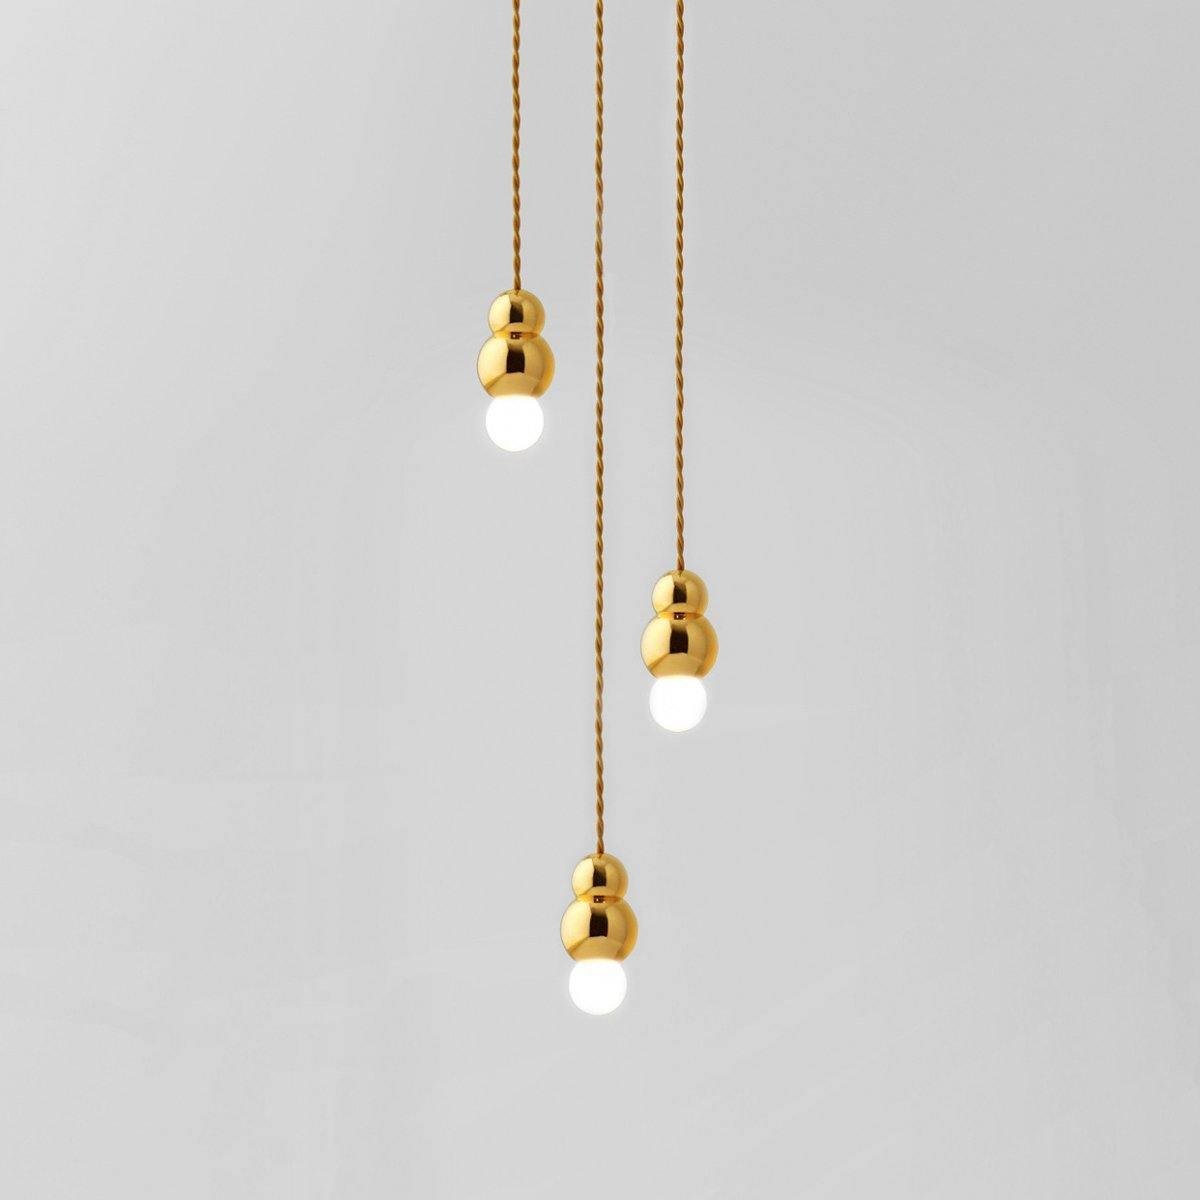 3-Head Ball Light Pendant Series, Gold, 3.14″ Diameter x 5.03″ Height (8cm x 12.8cm), Flexible Cord